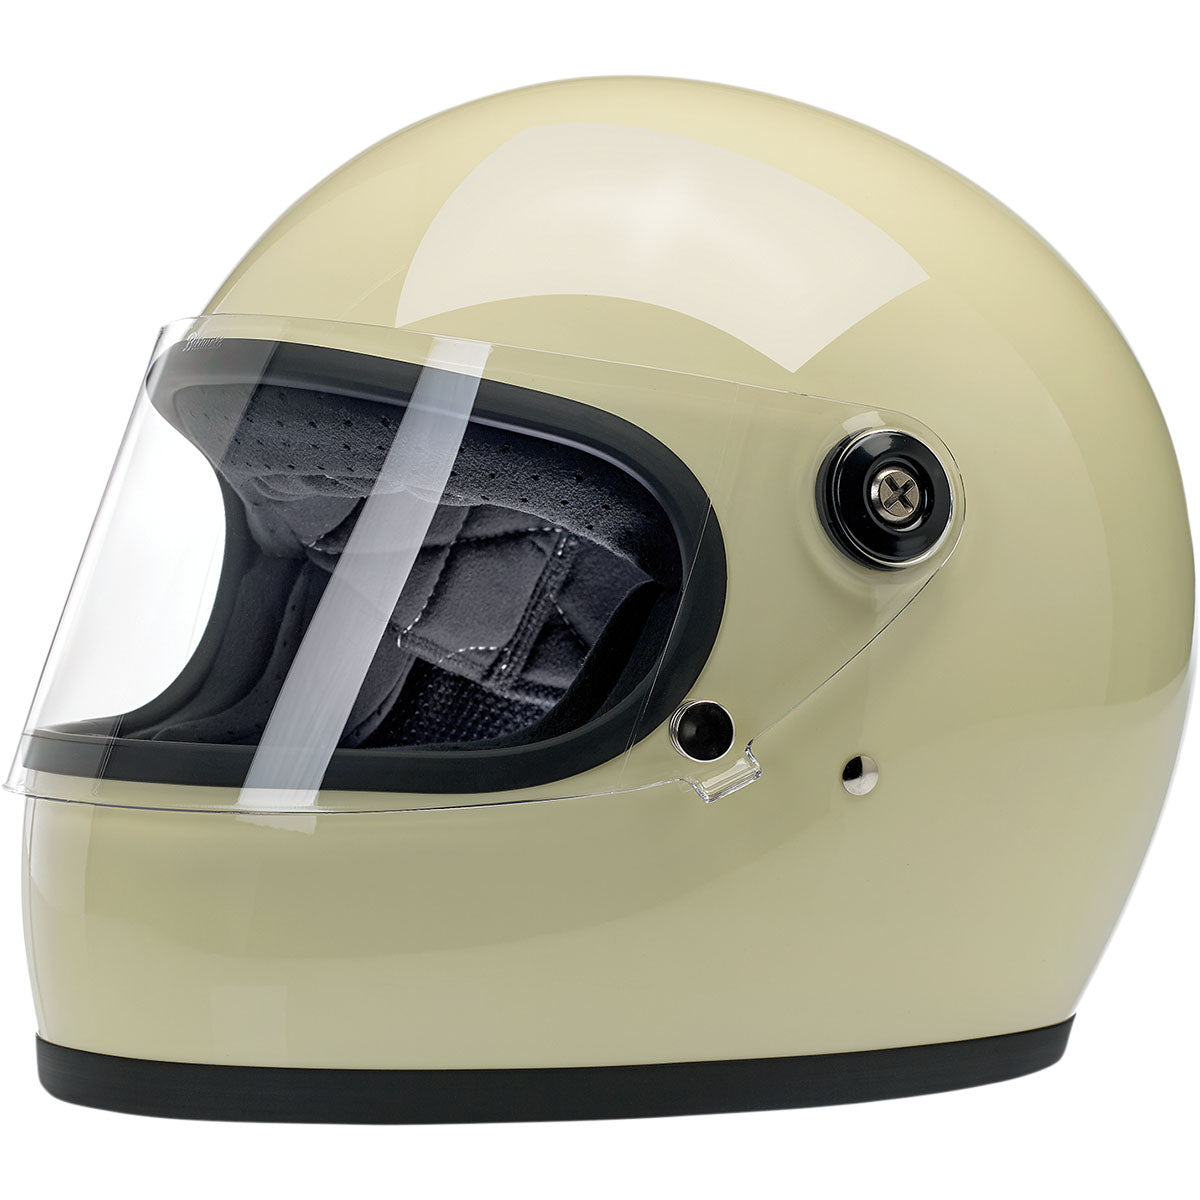 Biltwell Gringo S Helmet CLOSEOUT - Gloss Vintage White